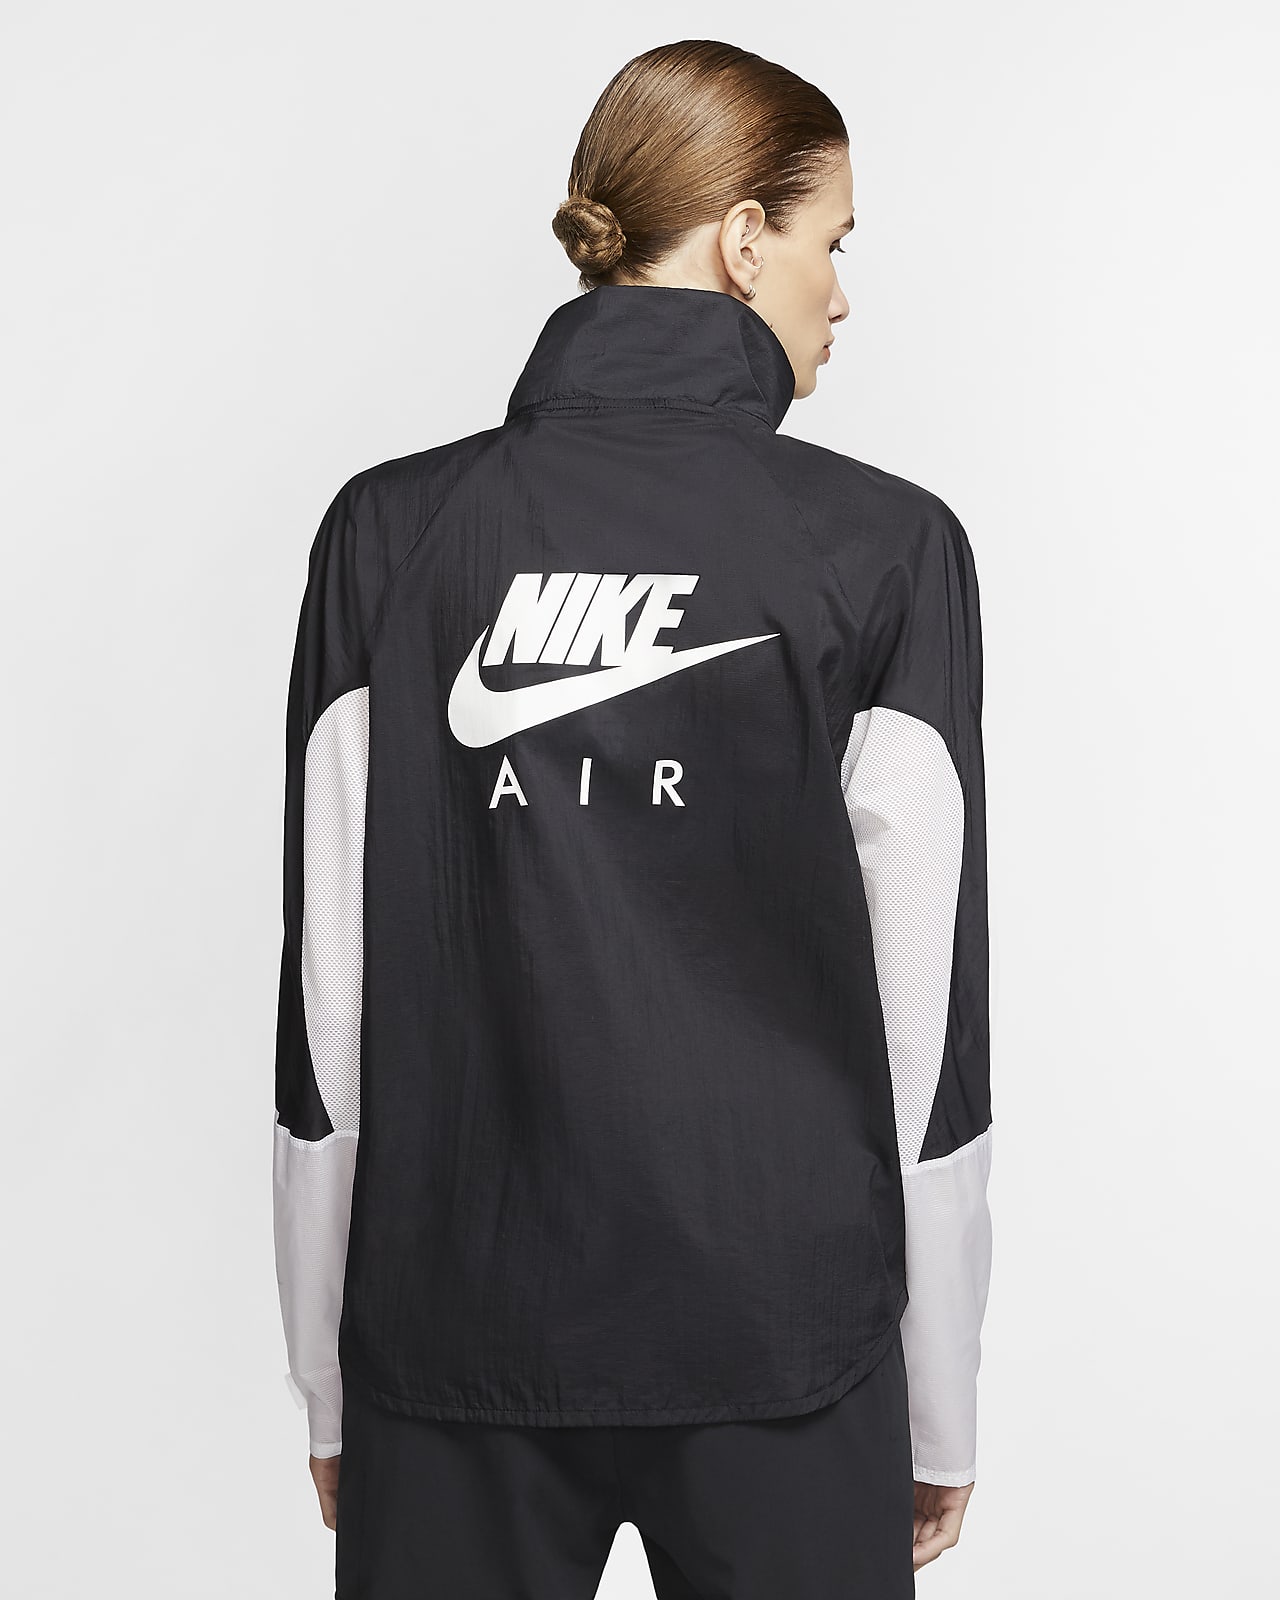 nike air women's jacket